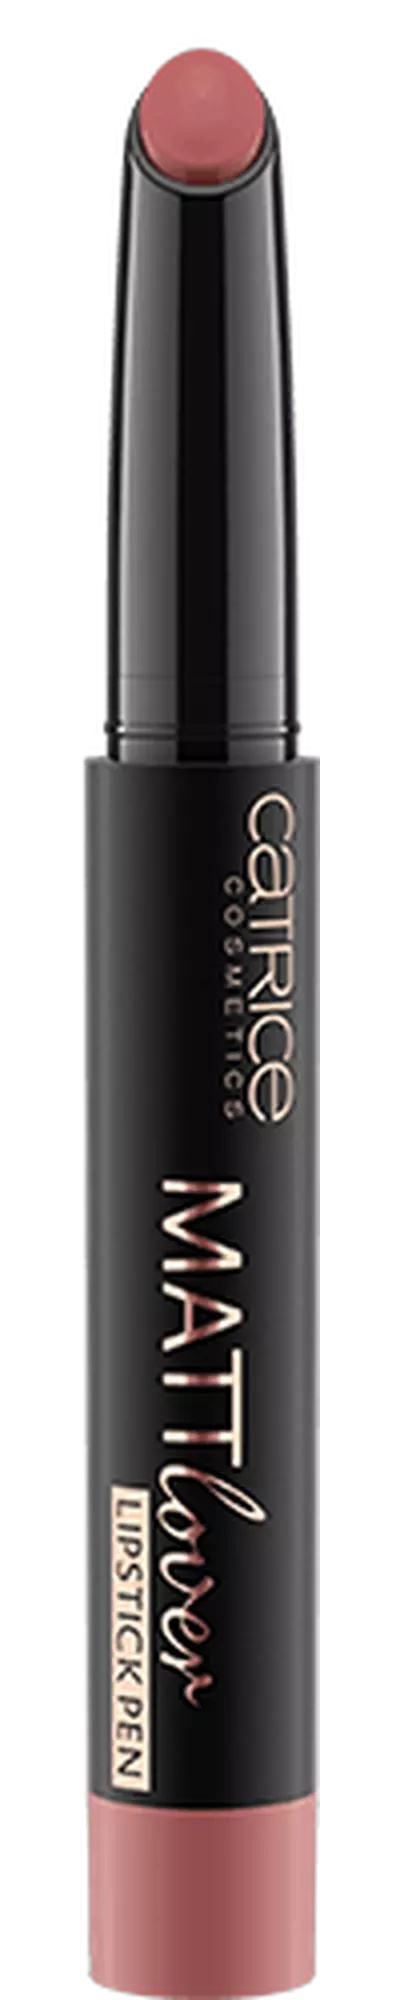 Catrice Mattlover Lipstick Pen